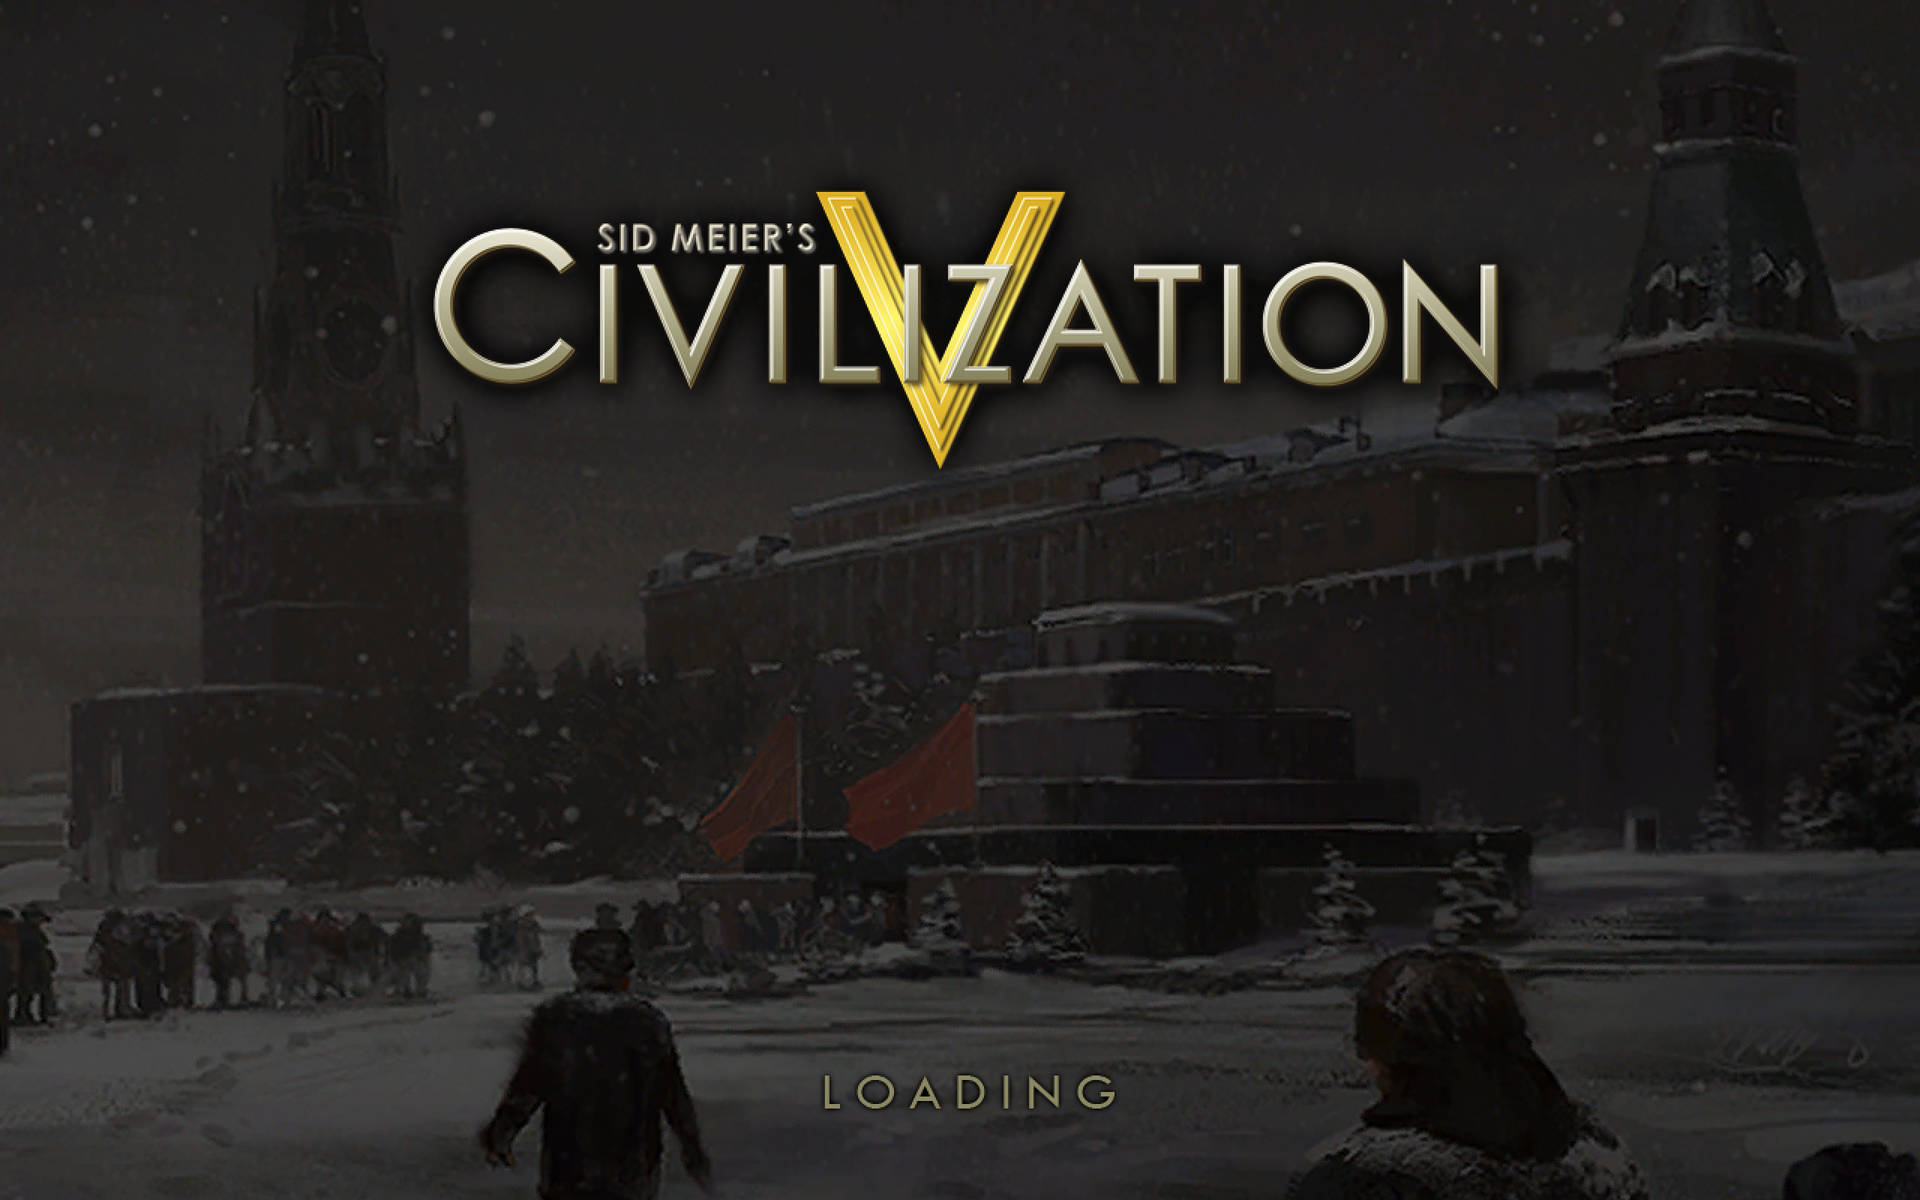 Loading Dark Civilization 5 Background